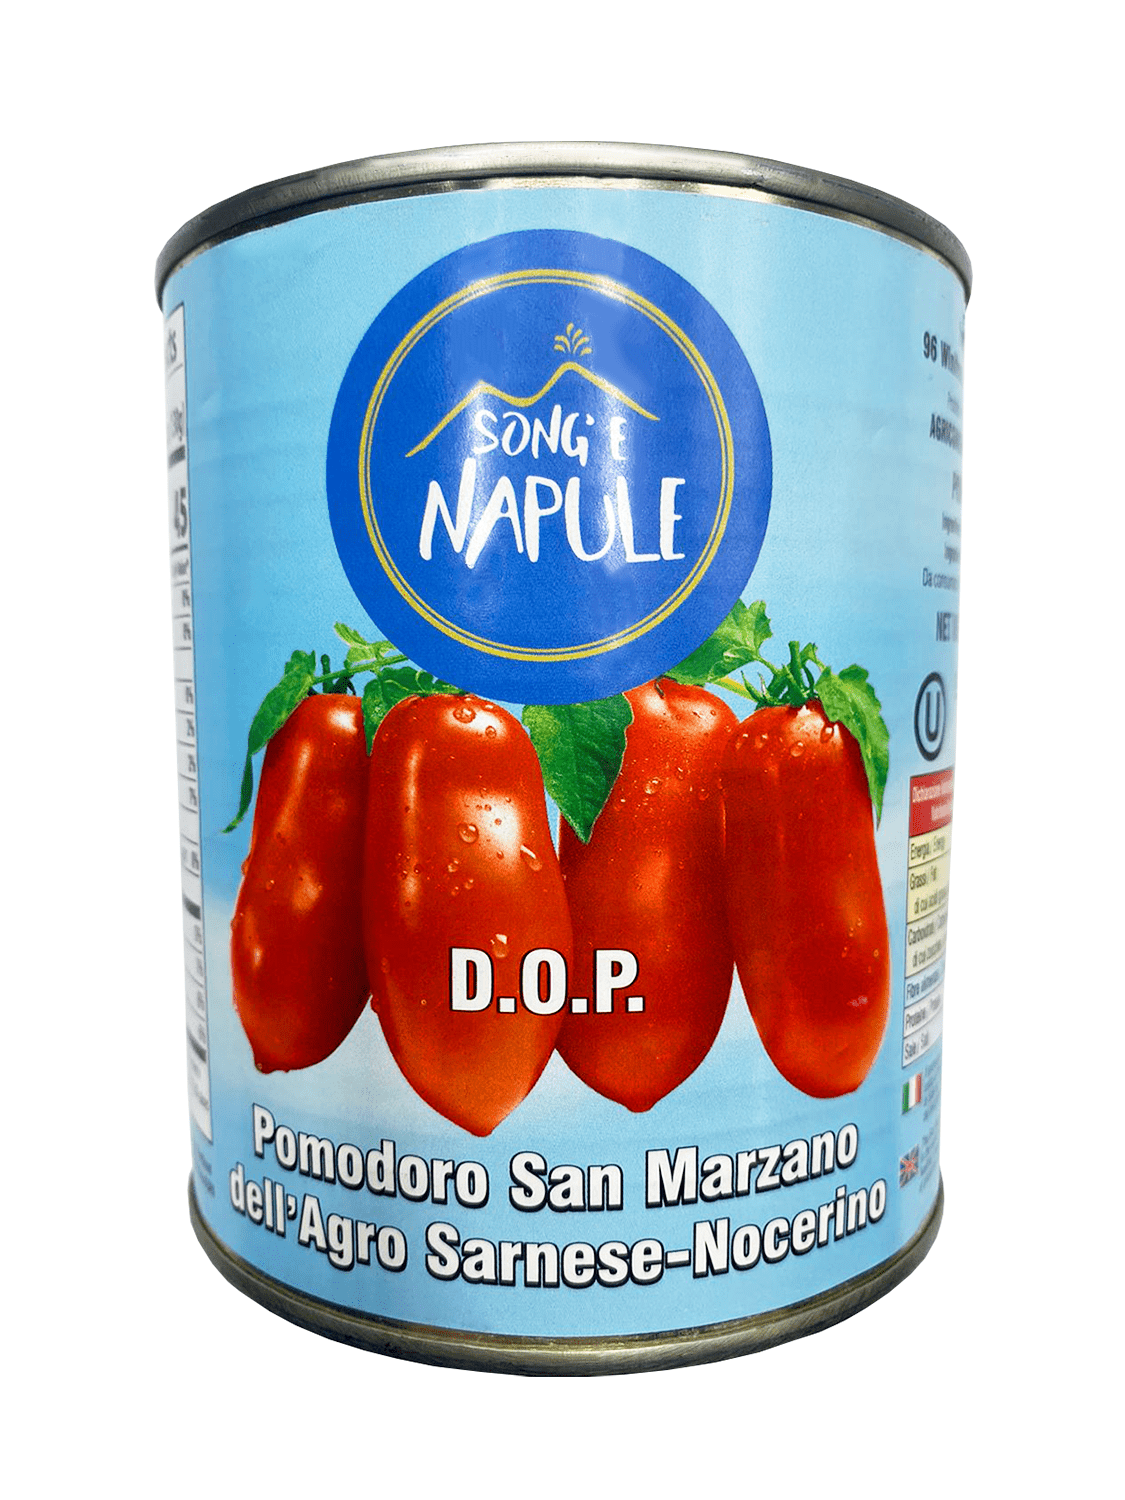 Song E Napule DOP San Marzano Peeled Tomatoes 28oz | Supermarket Italy